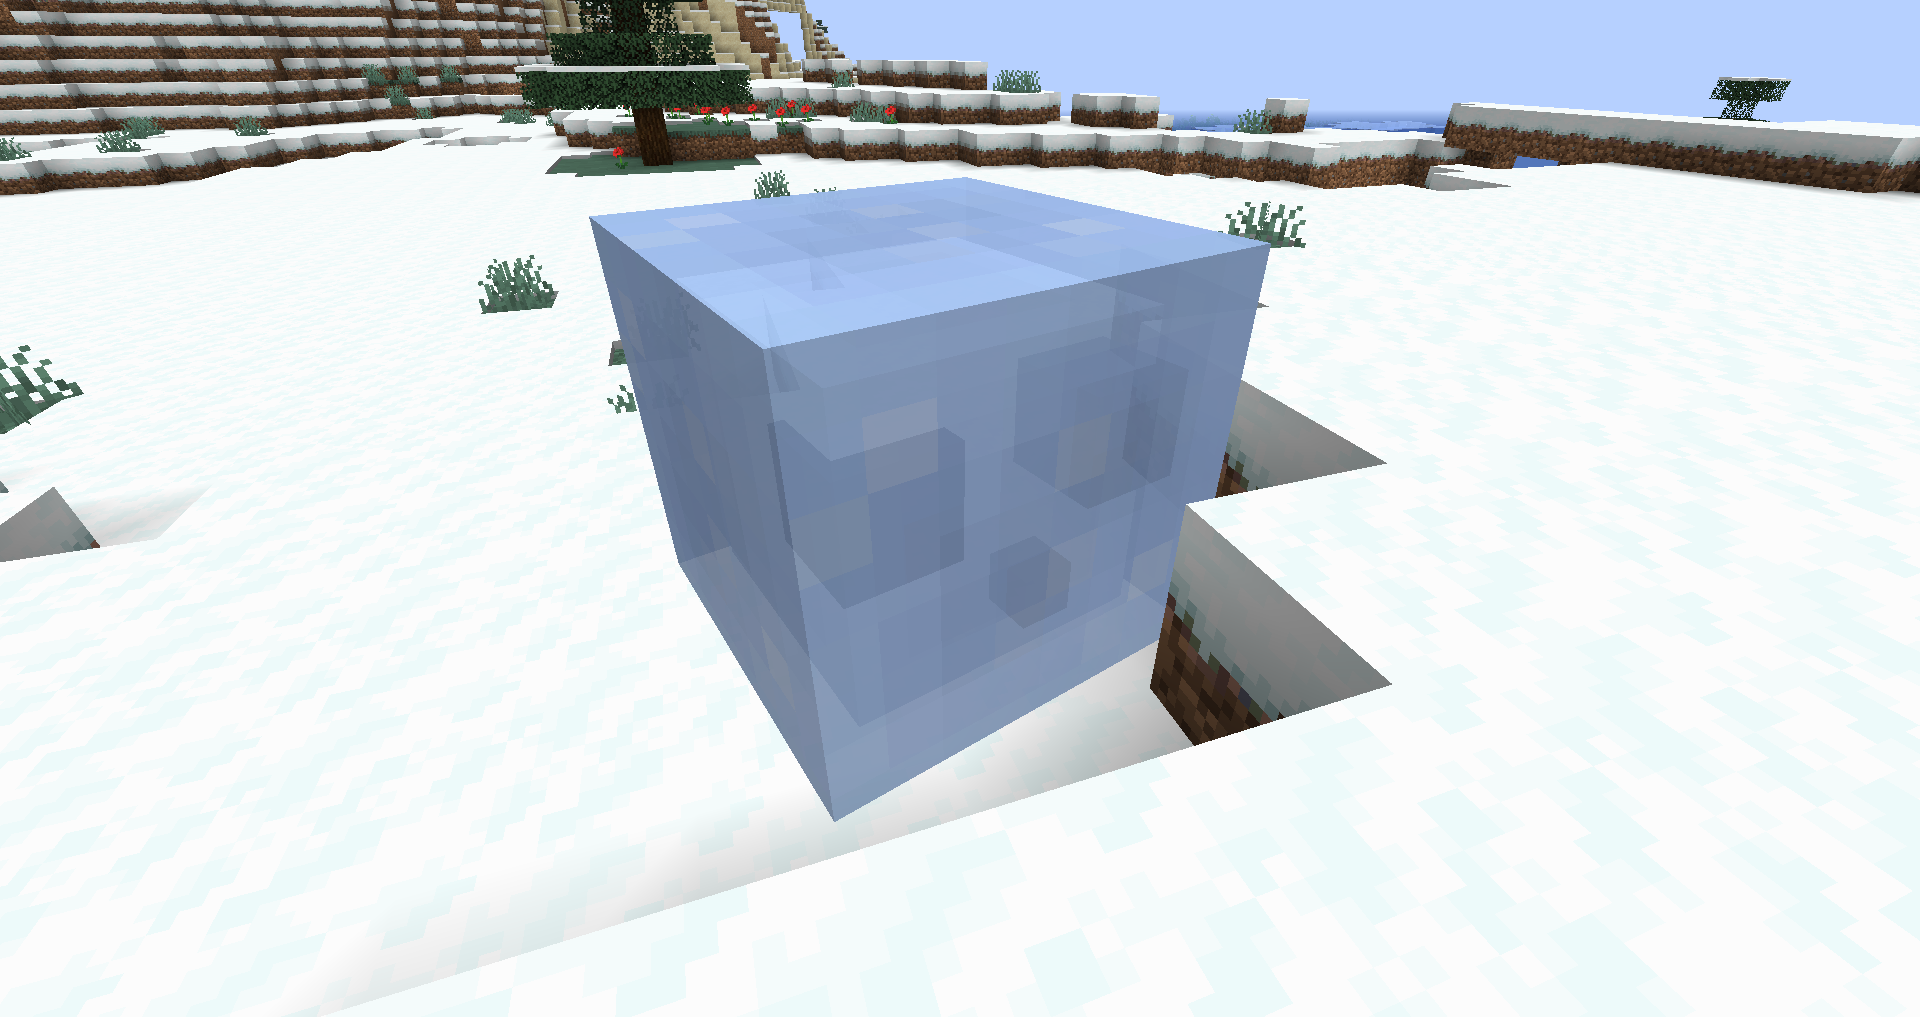 ice_cube